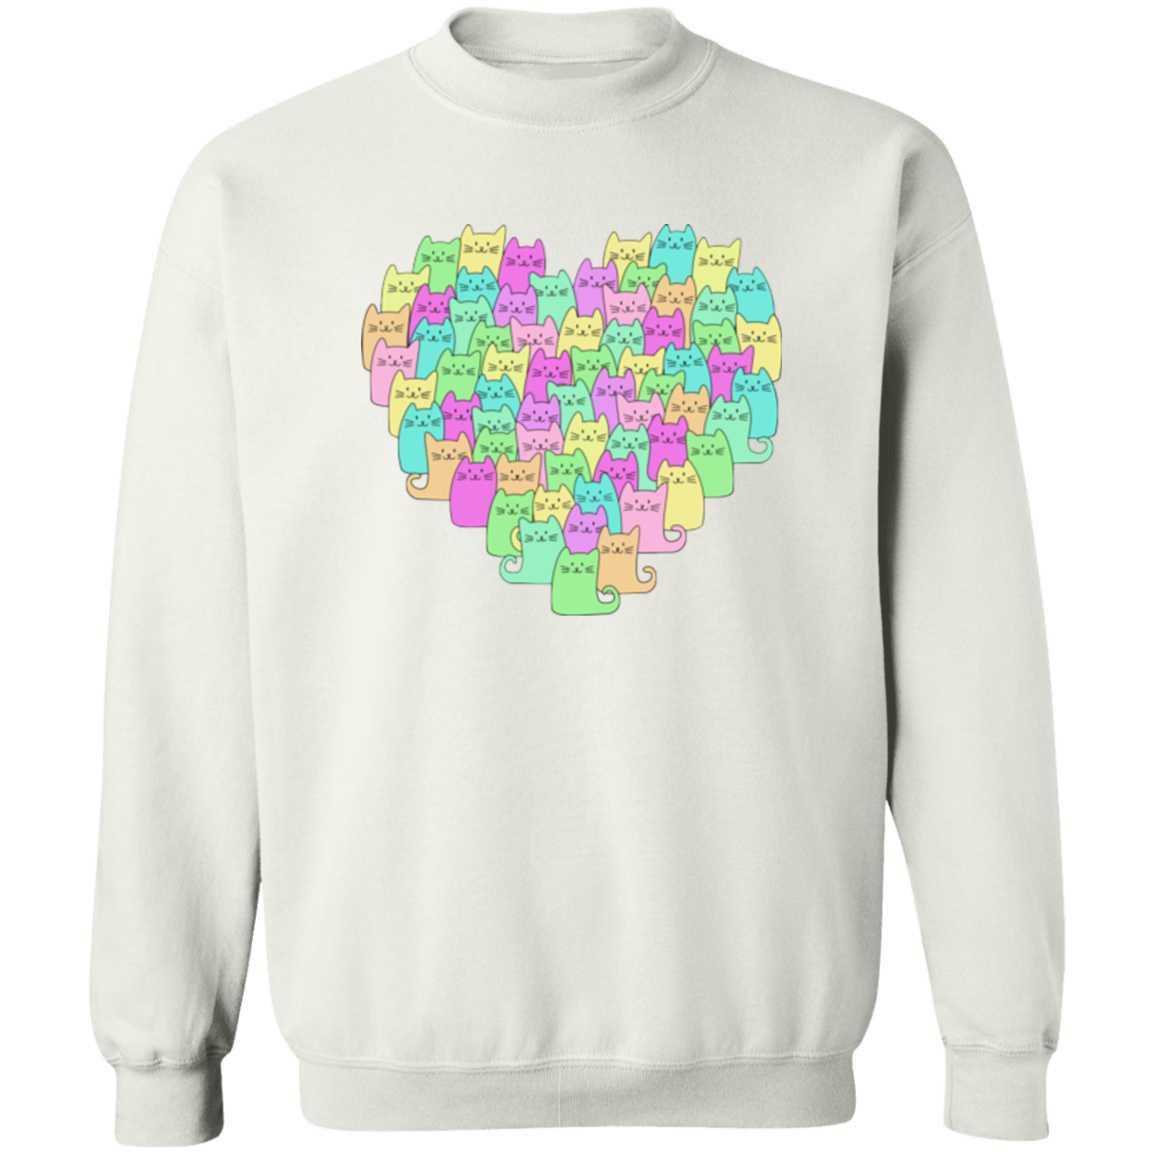 Heartful Sweatshirt